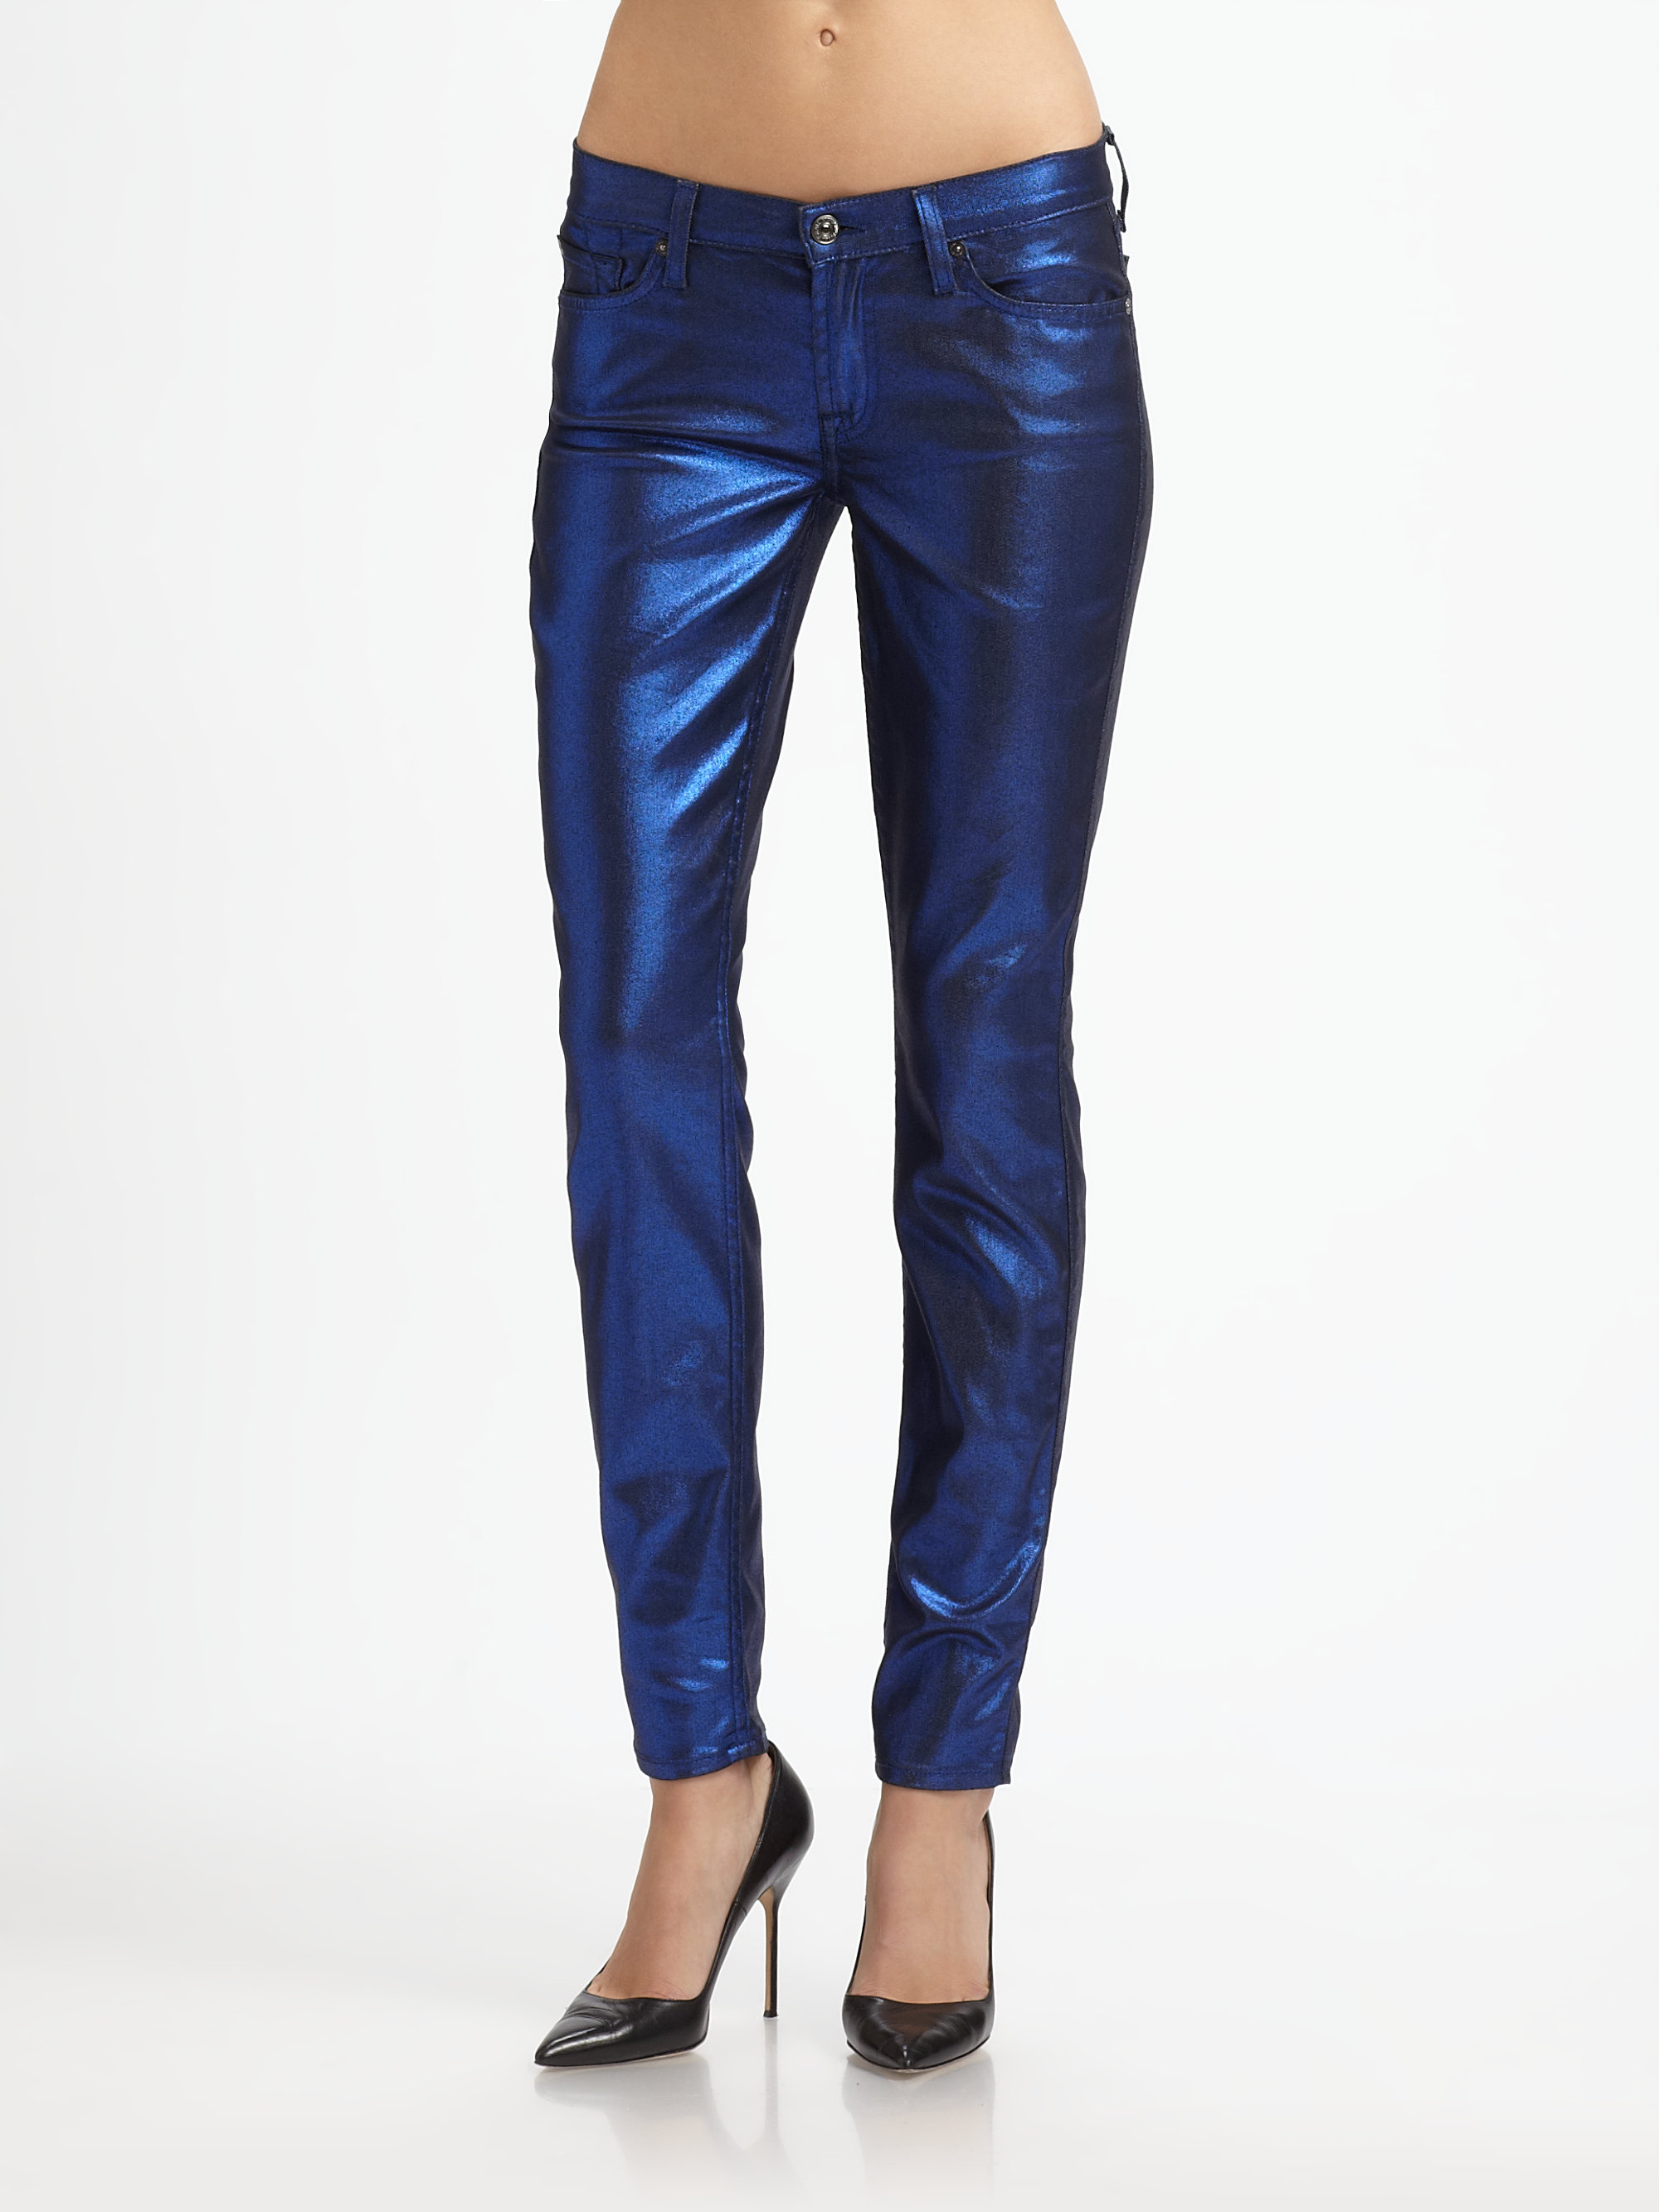 Lyst - 7 For All Mankind Liquid Metallic Skinny Jeans in Blue